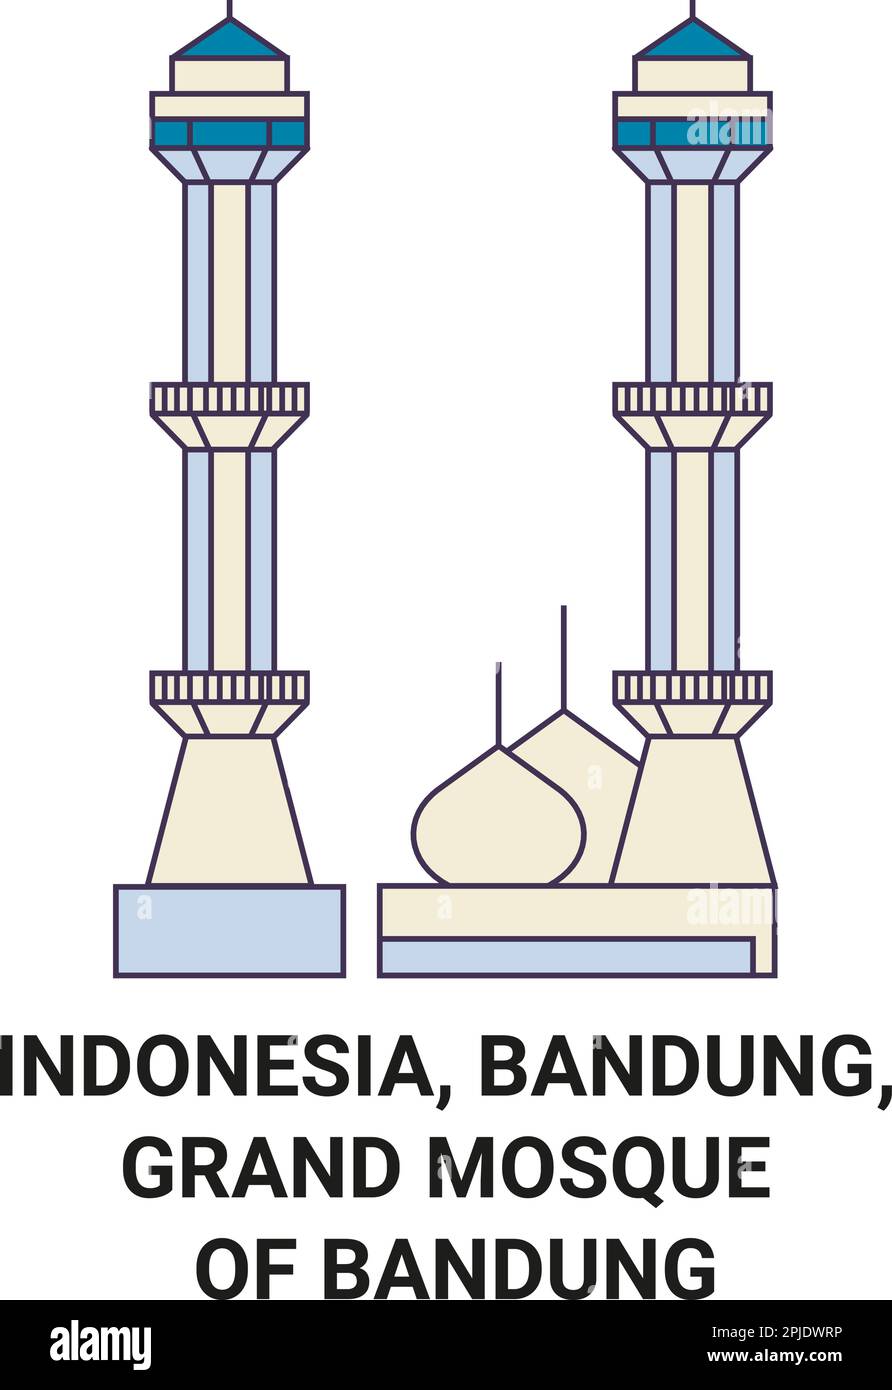 Indonesia, Bandung, Grand Mosque Of Bandung travel landmark vector illustration Stock Vector